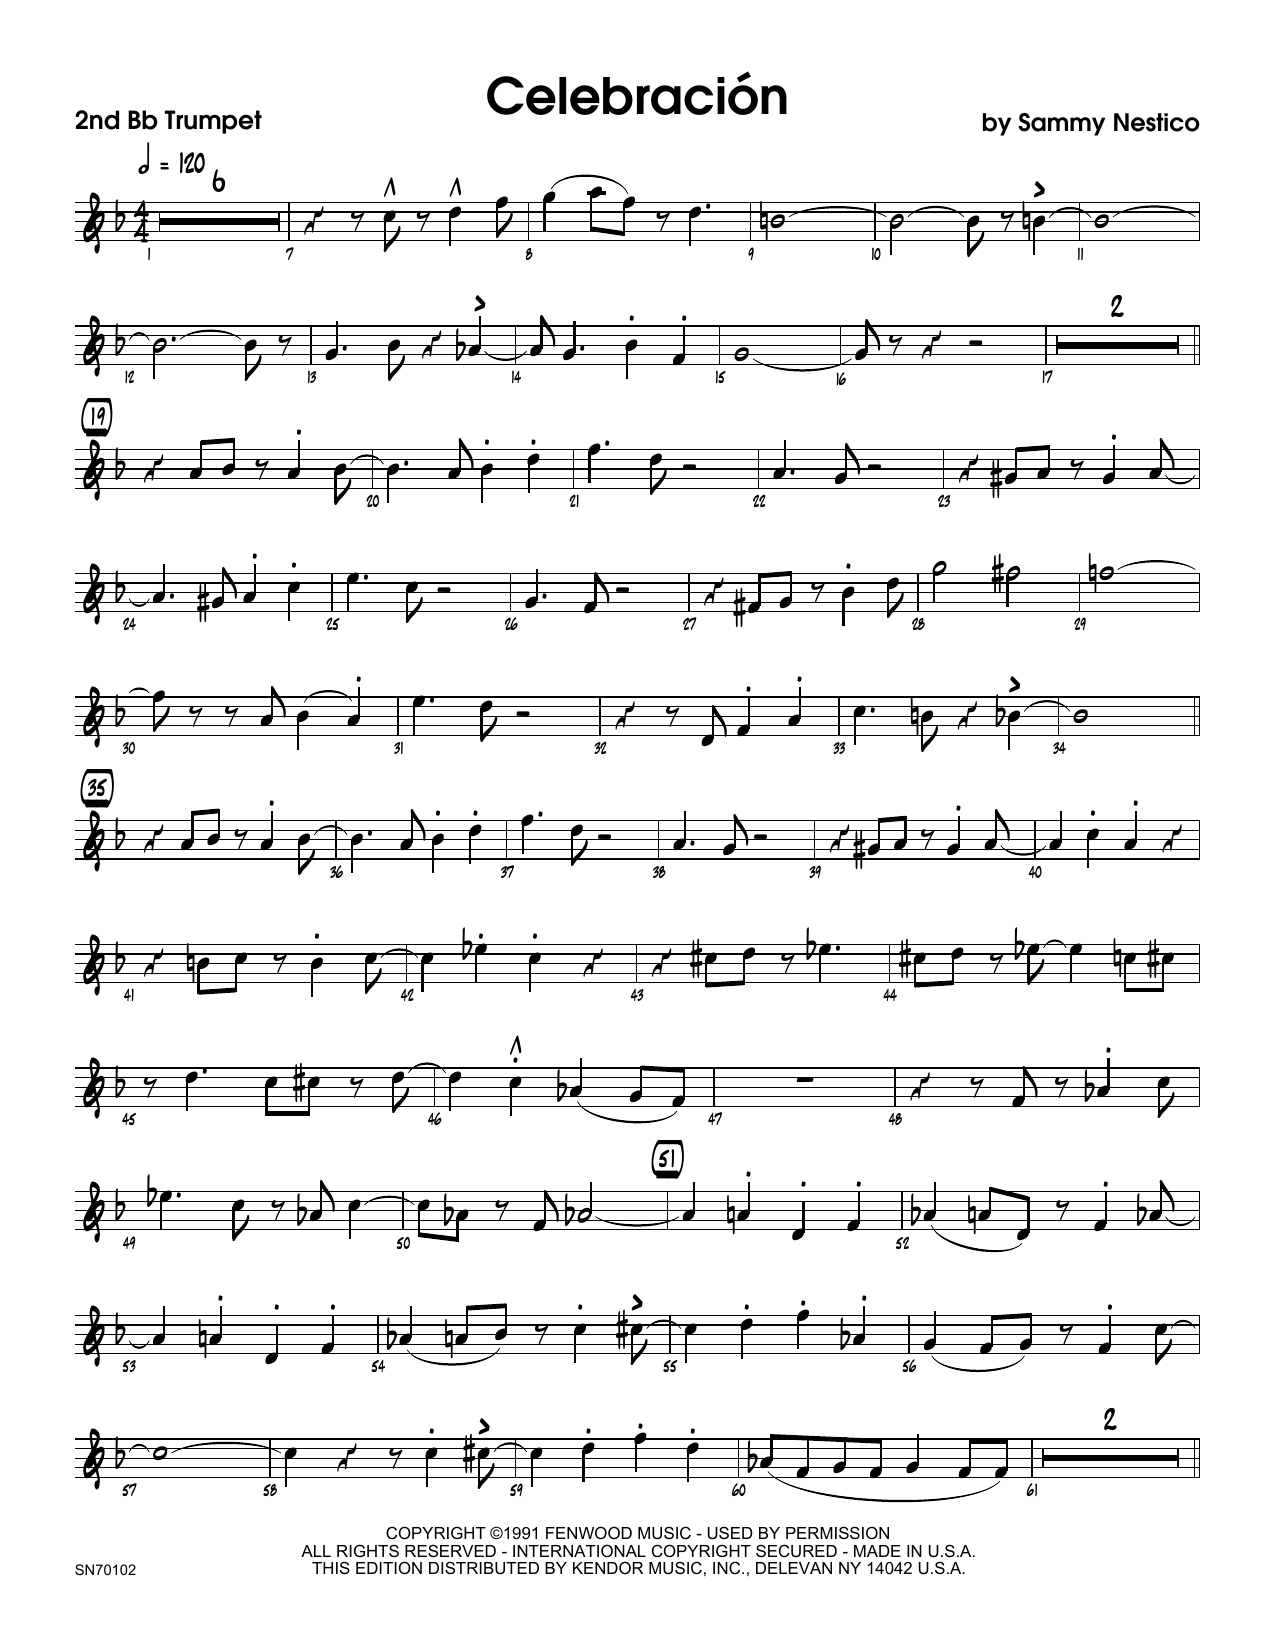 Download Sammy Nestico Celebracion - 2nd Bb Trumpet Sheet Music